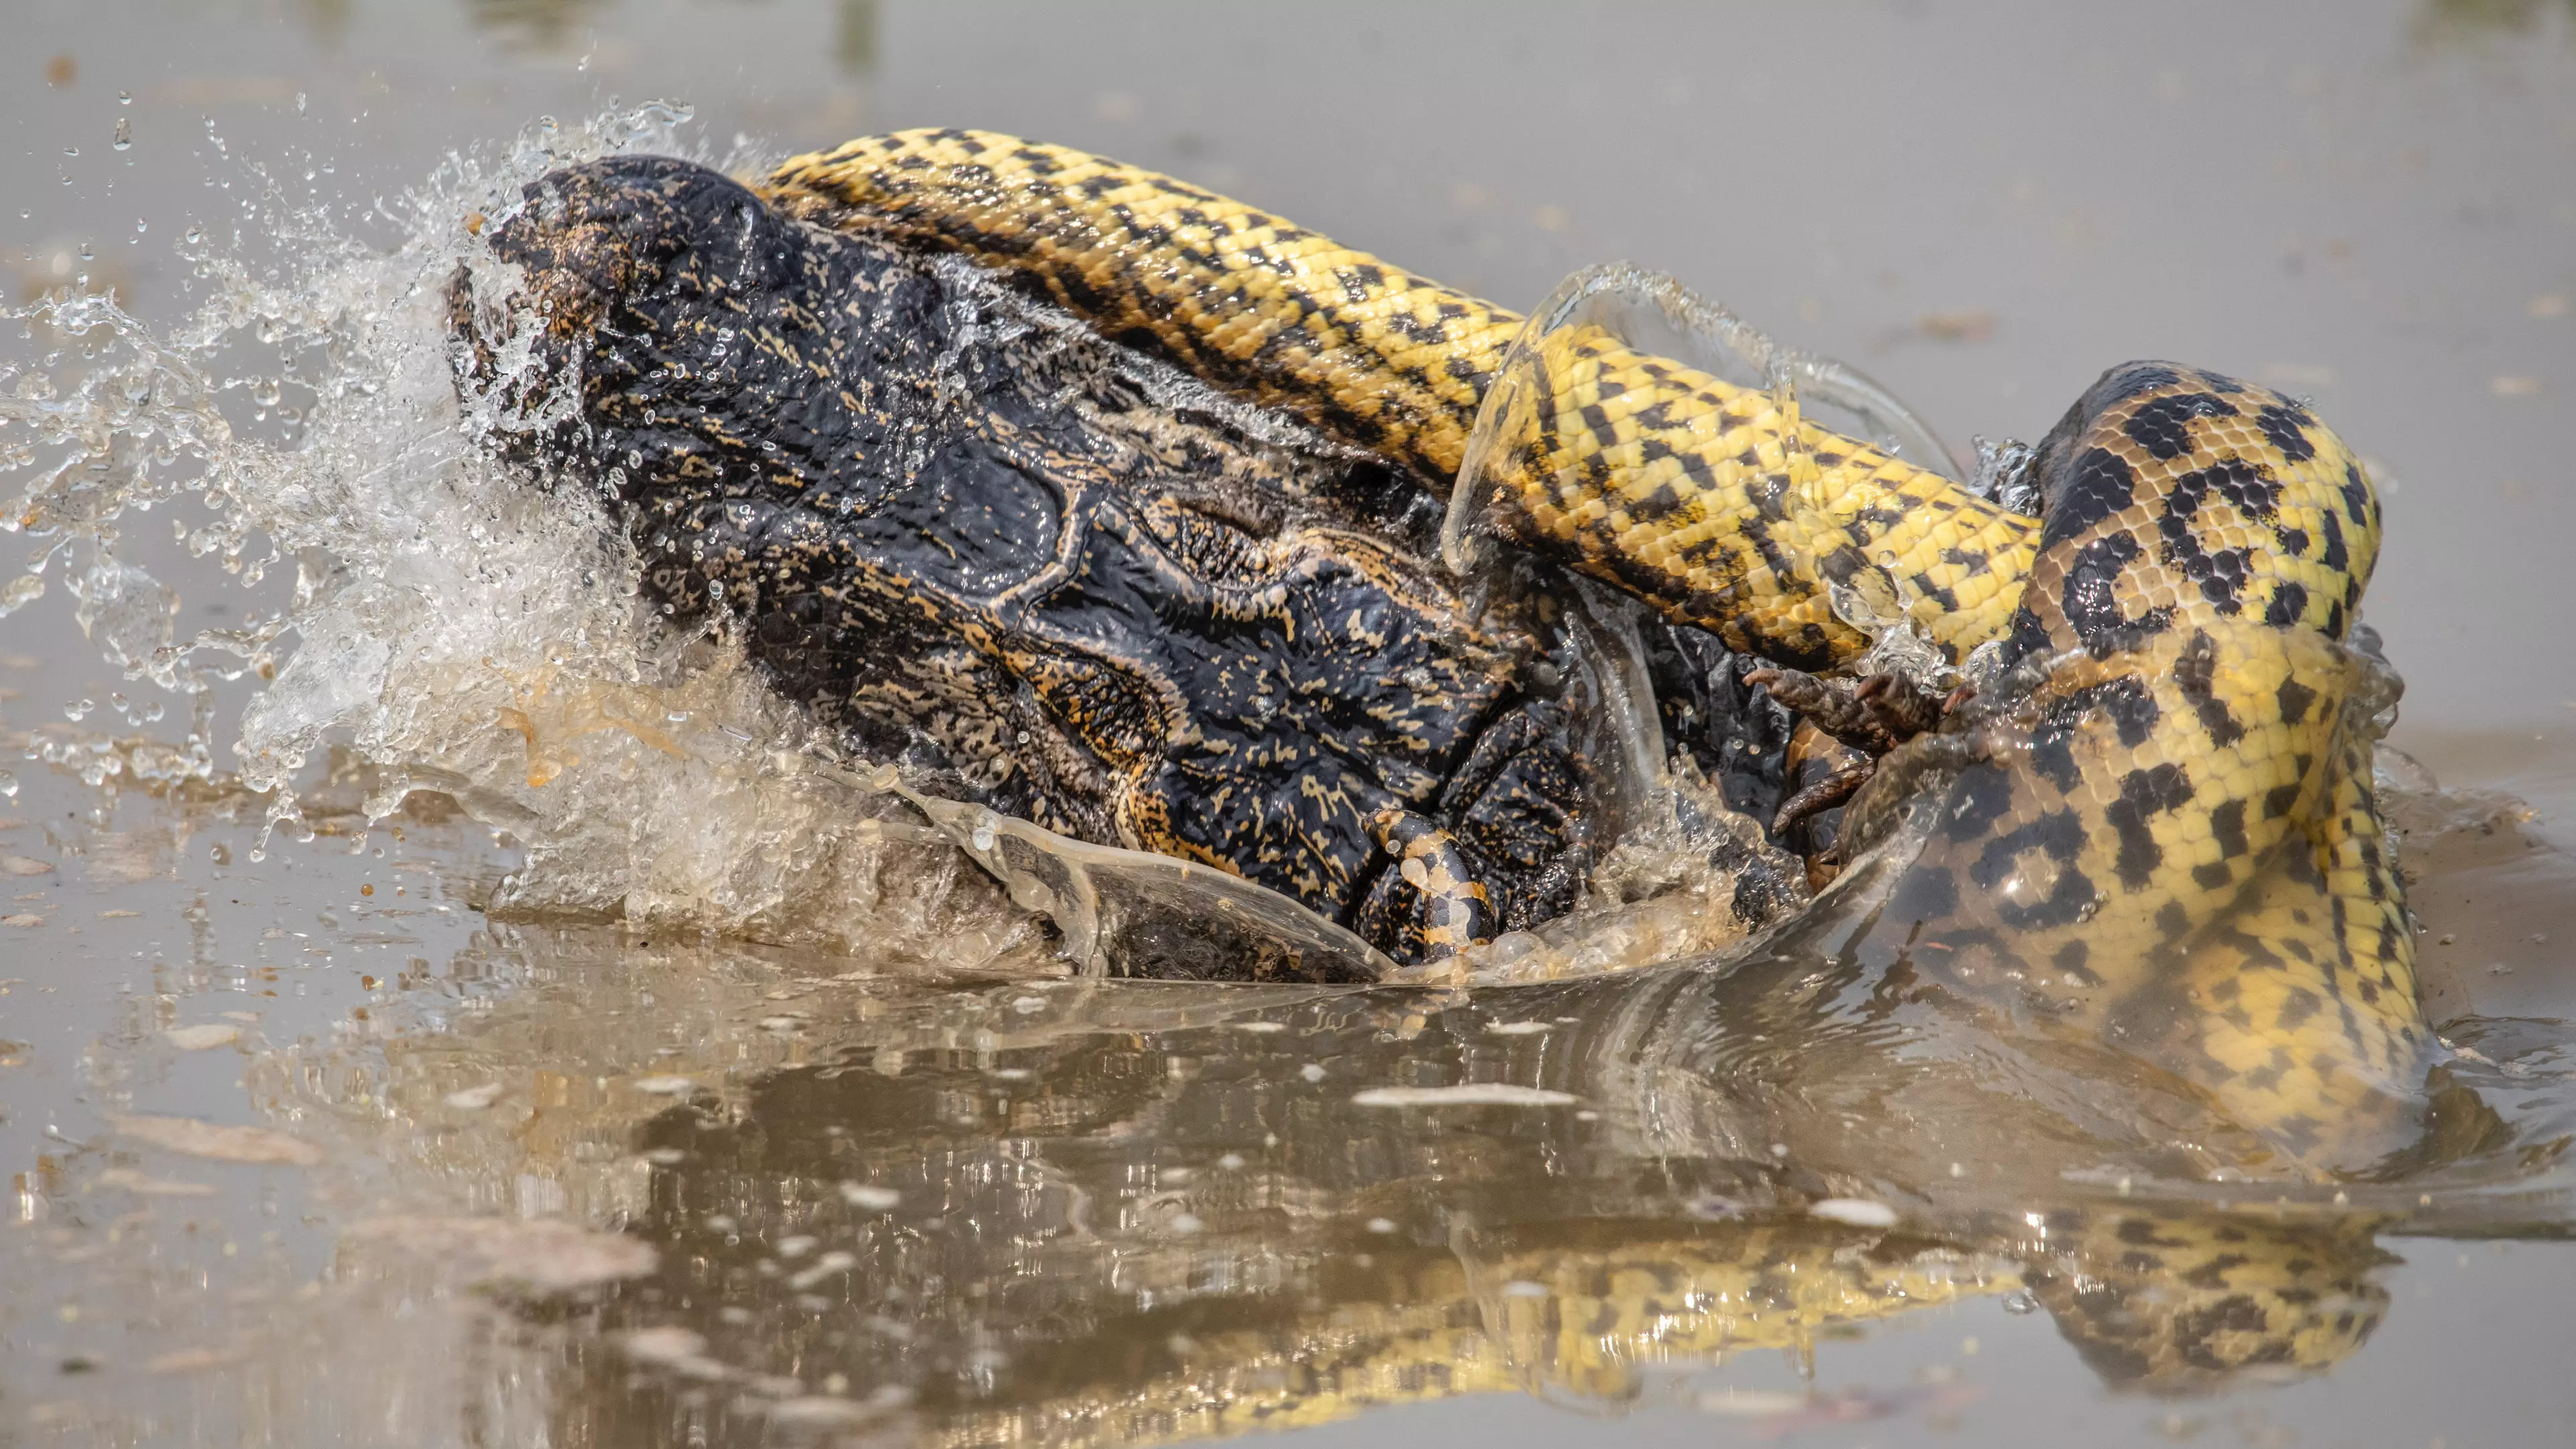 Huge 29ft Anaconda Kills Crocodile In Dramatic Fight To The Death